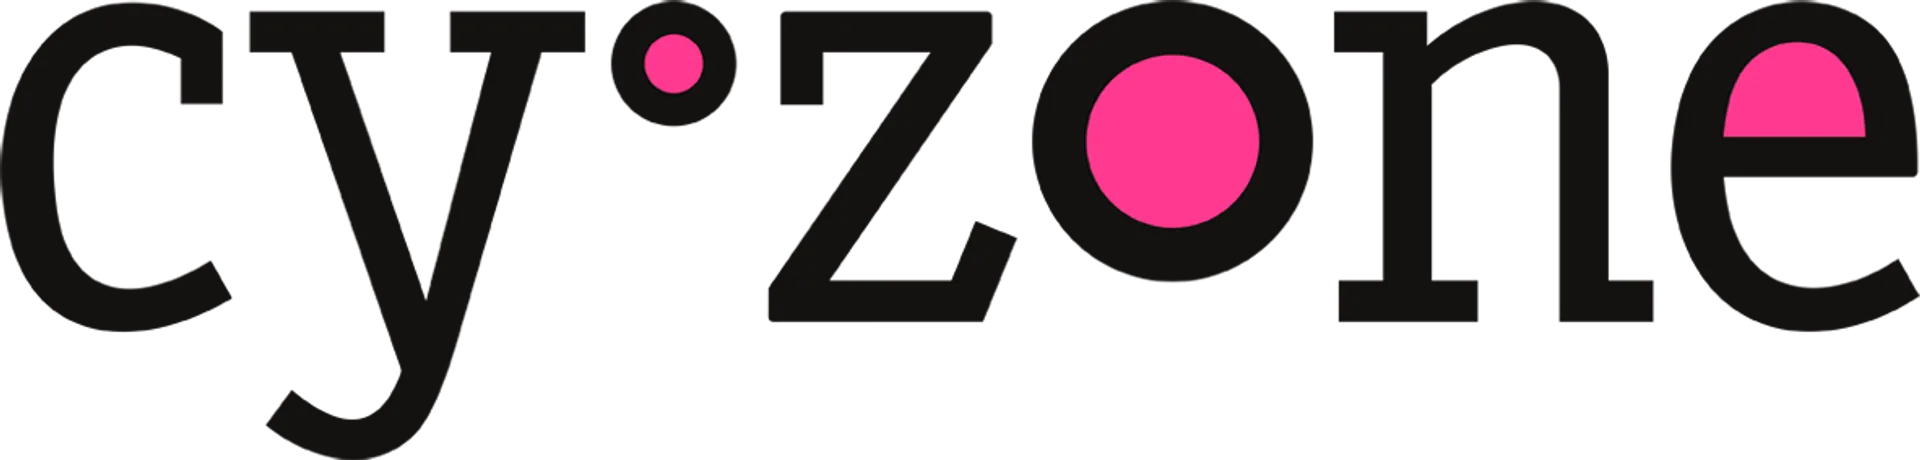 CYZONE logo